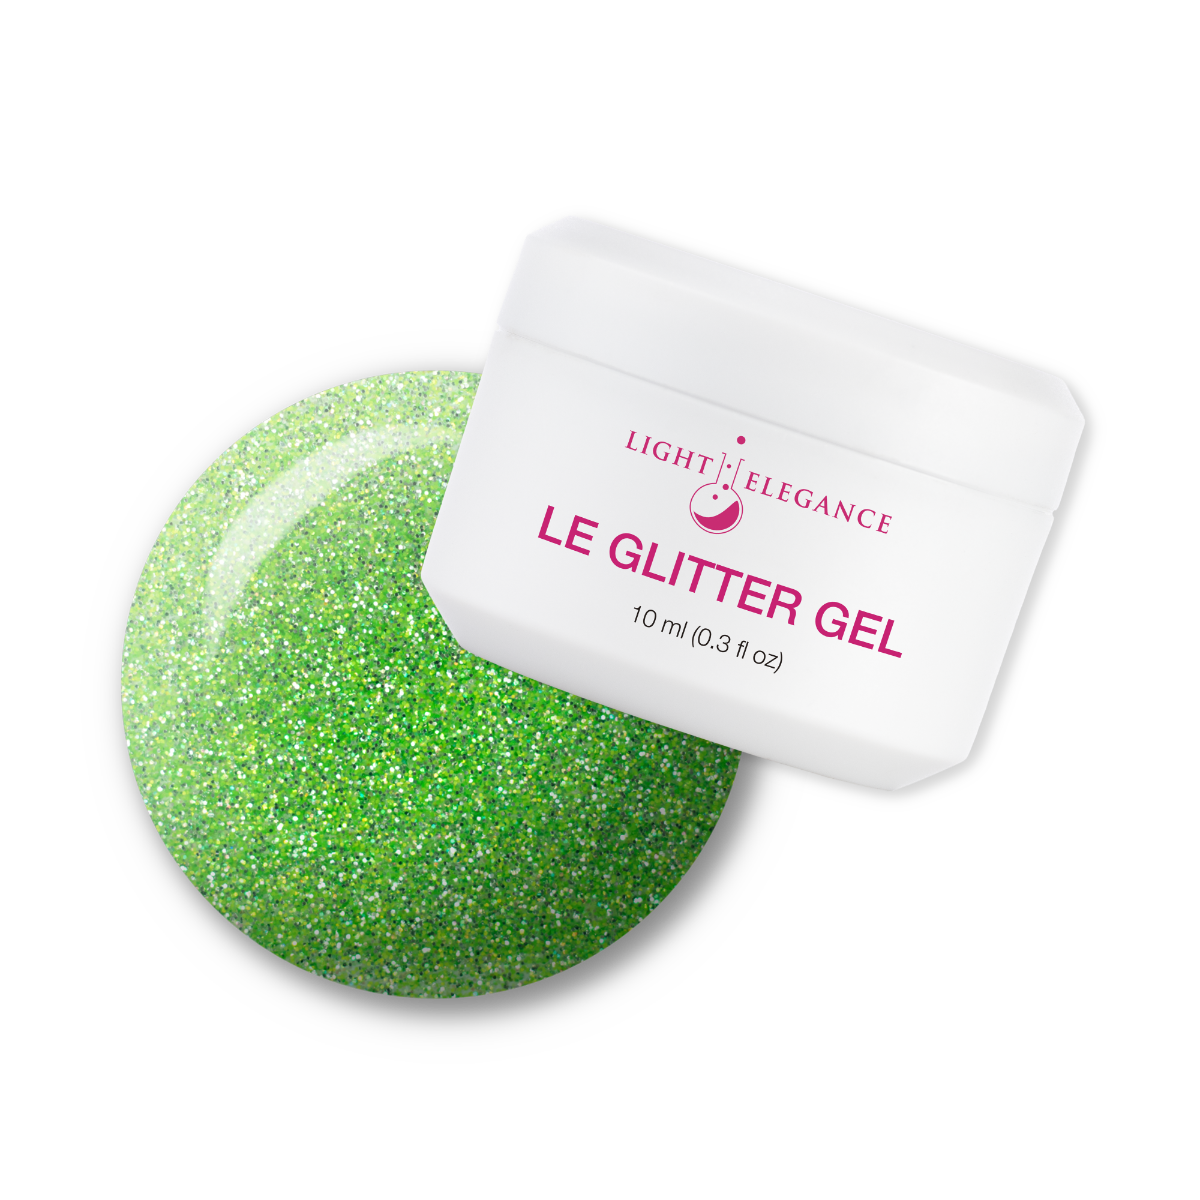 Light Elegance Glitter Gel - Kiwi to My Heart :: New Packaging